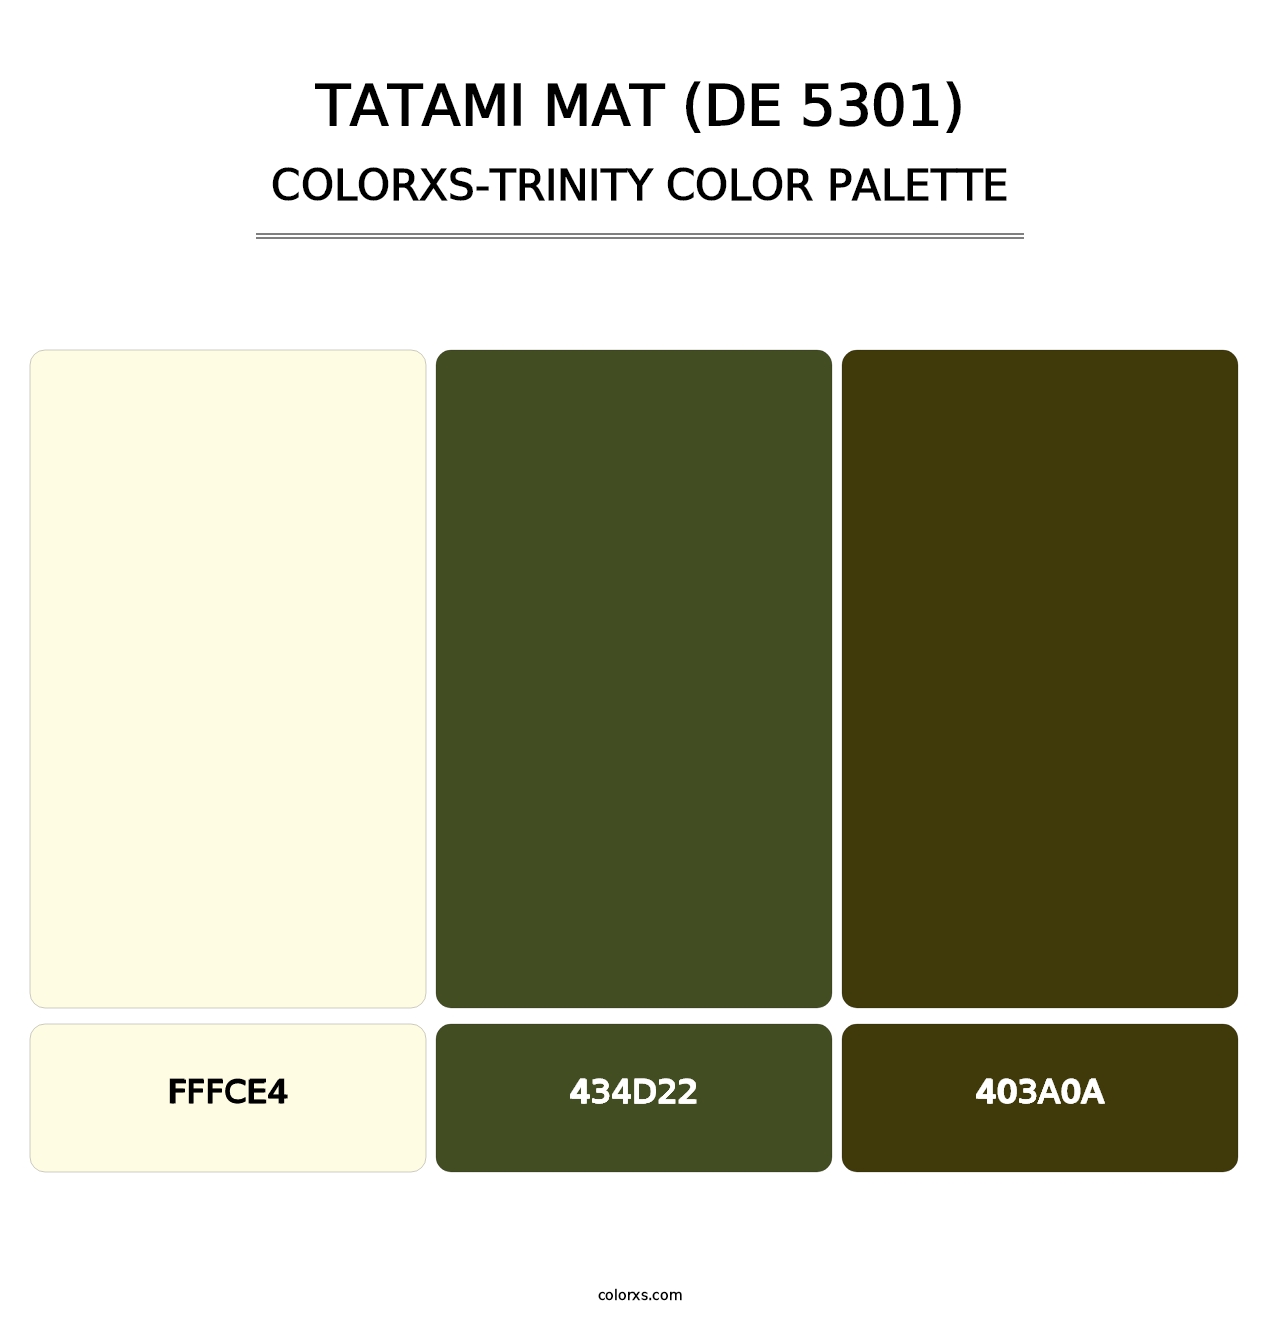 Tatami Mat (DE 5301) - Colorxs Trinity Palette